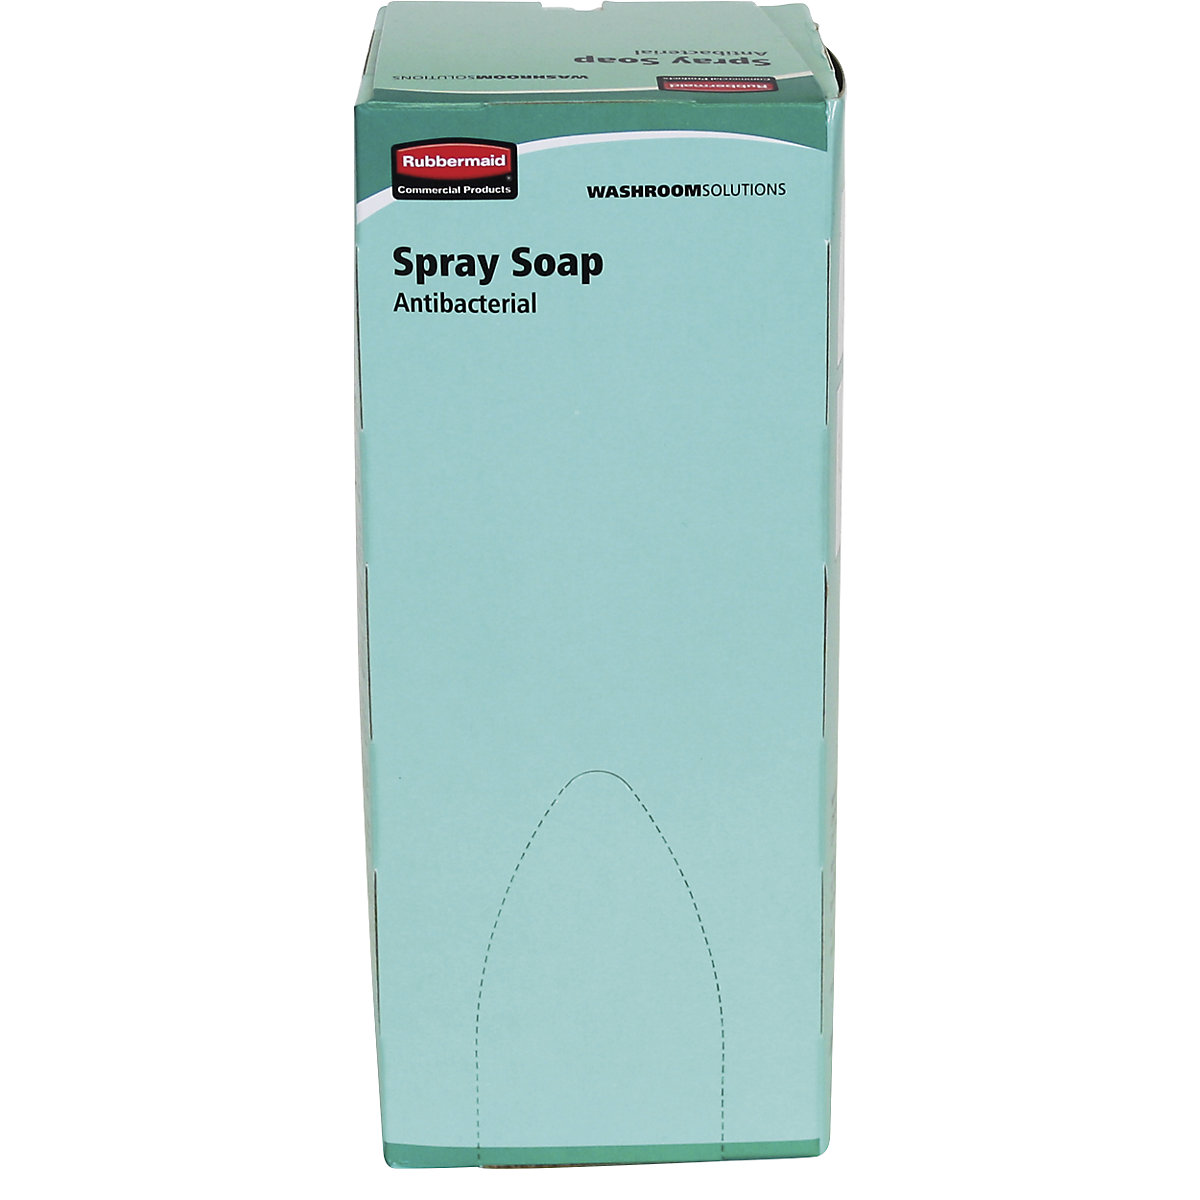 Antibacterial spray soap – Rubbermaid